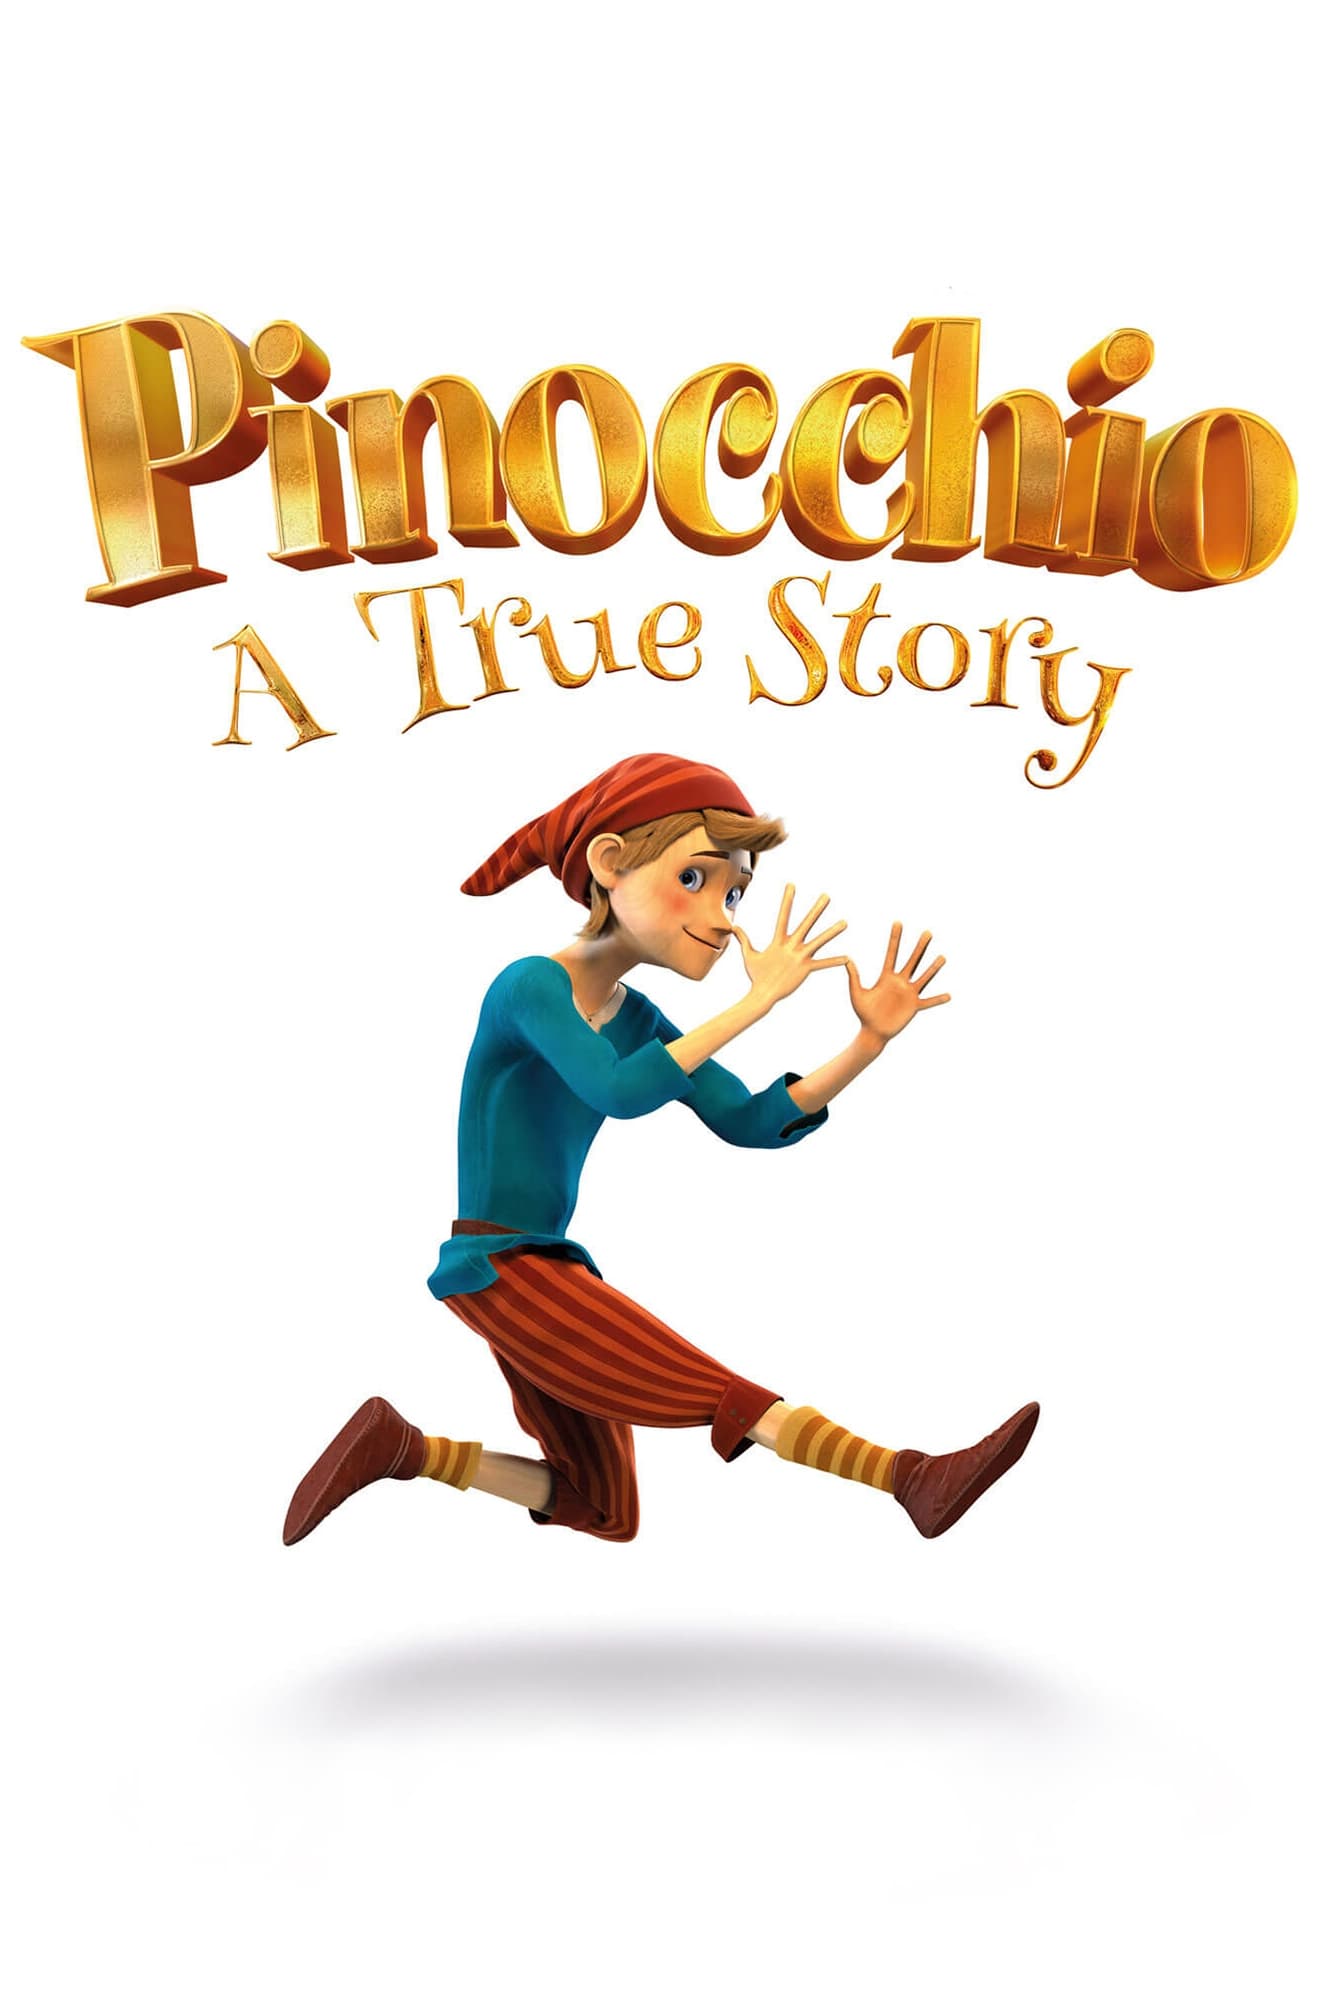 pinocchio story origin